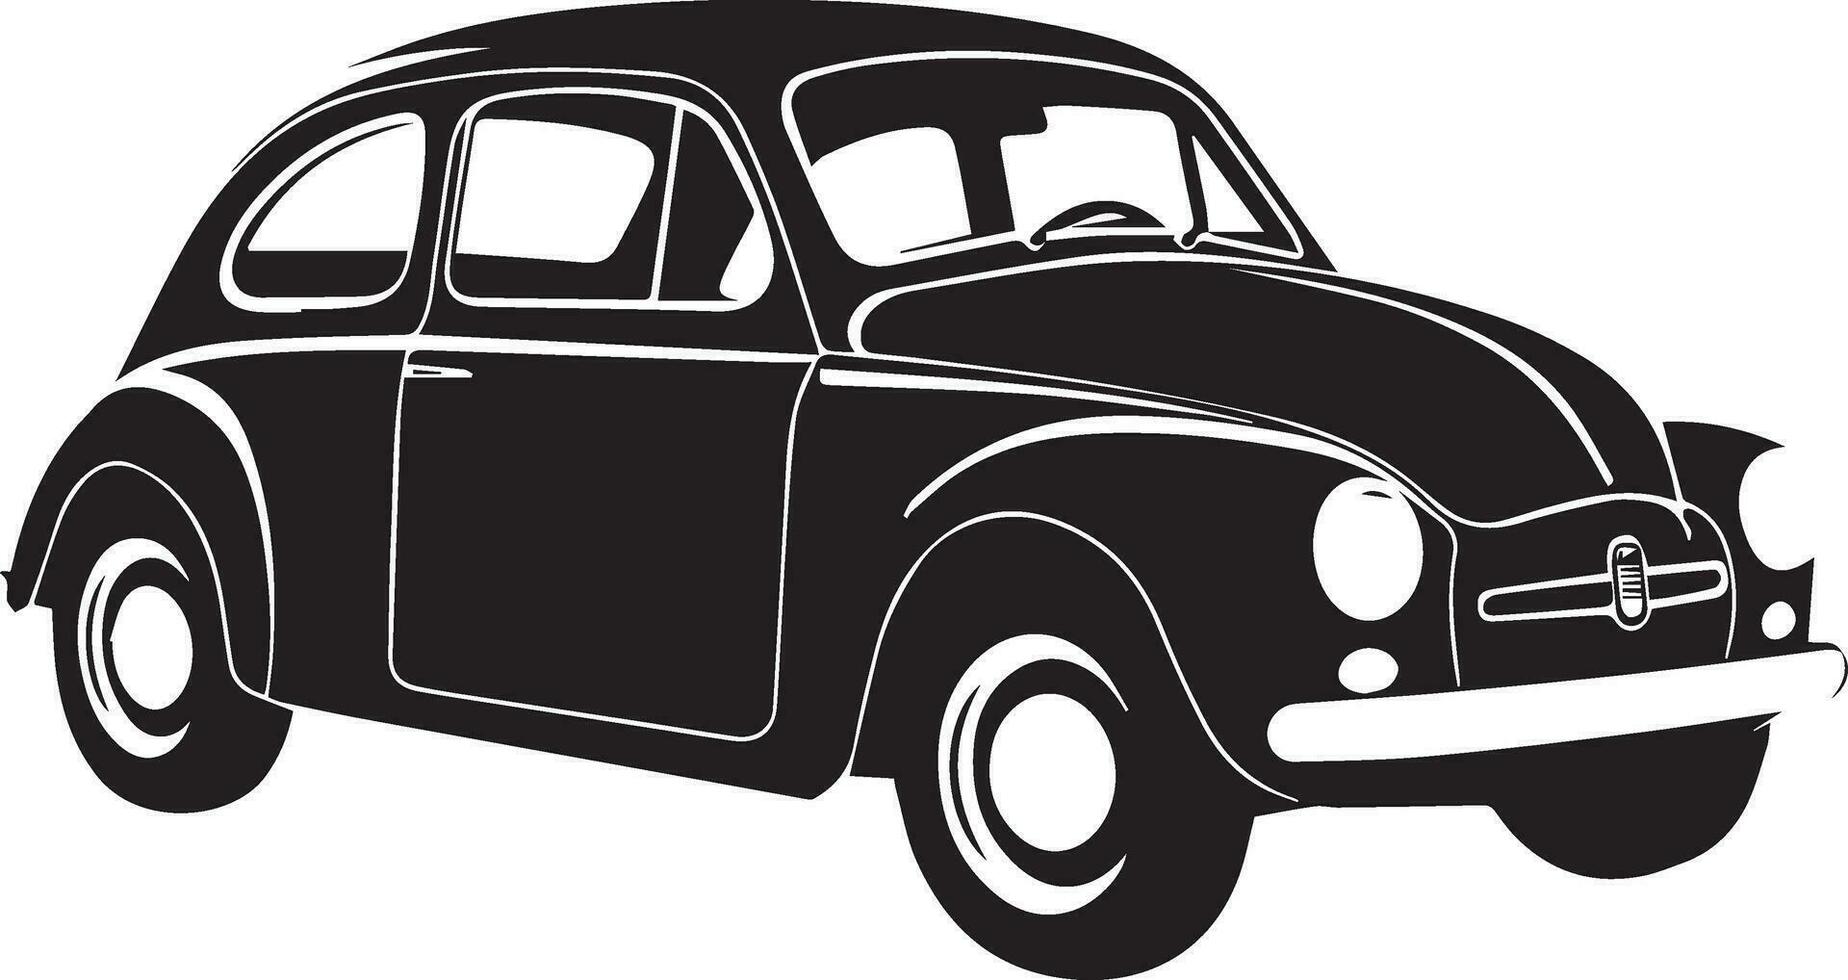 Car vector silhouette illustration black color 30